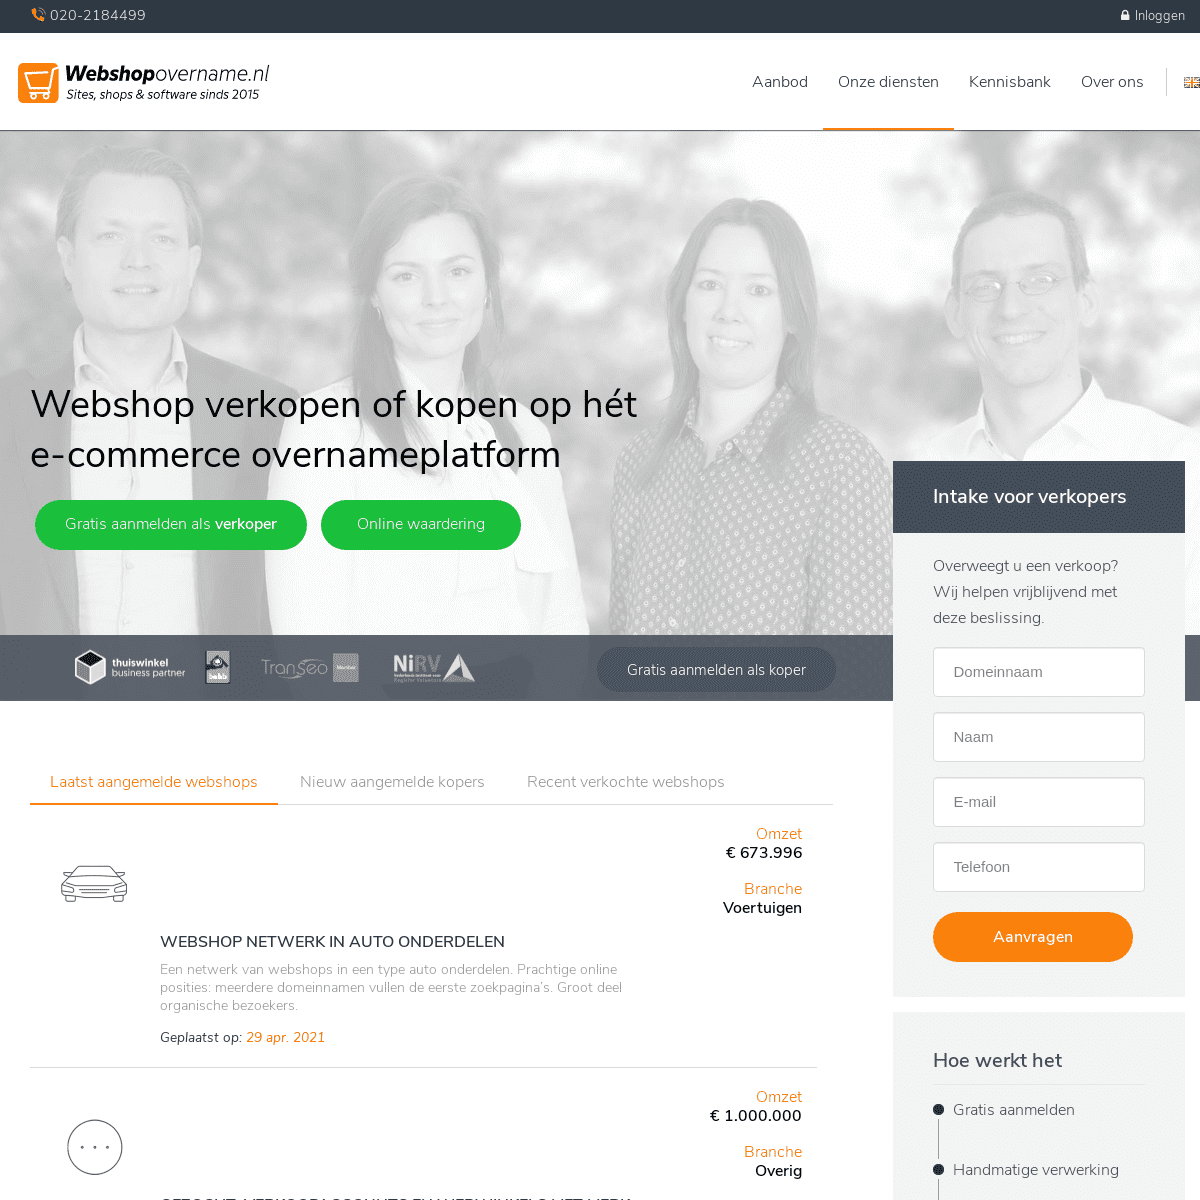 A complete backup of https://webshopovername.nl